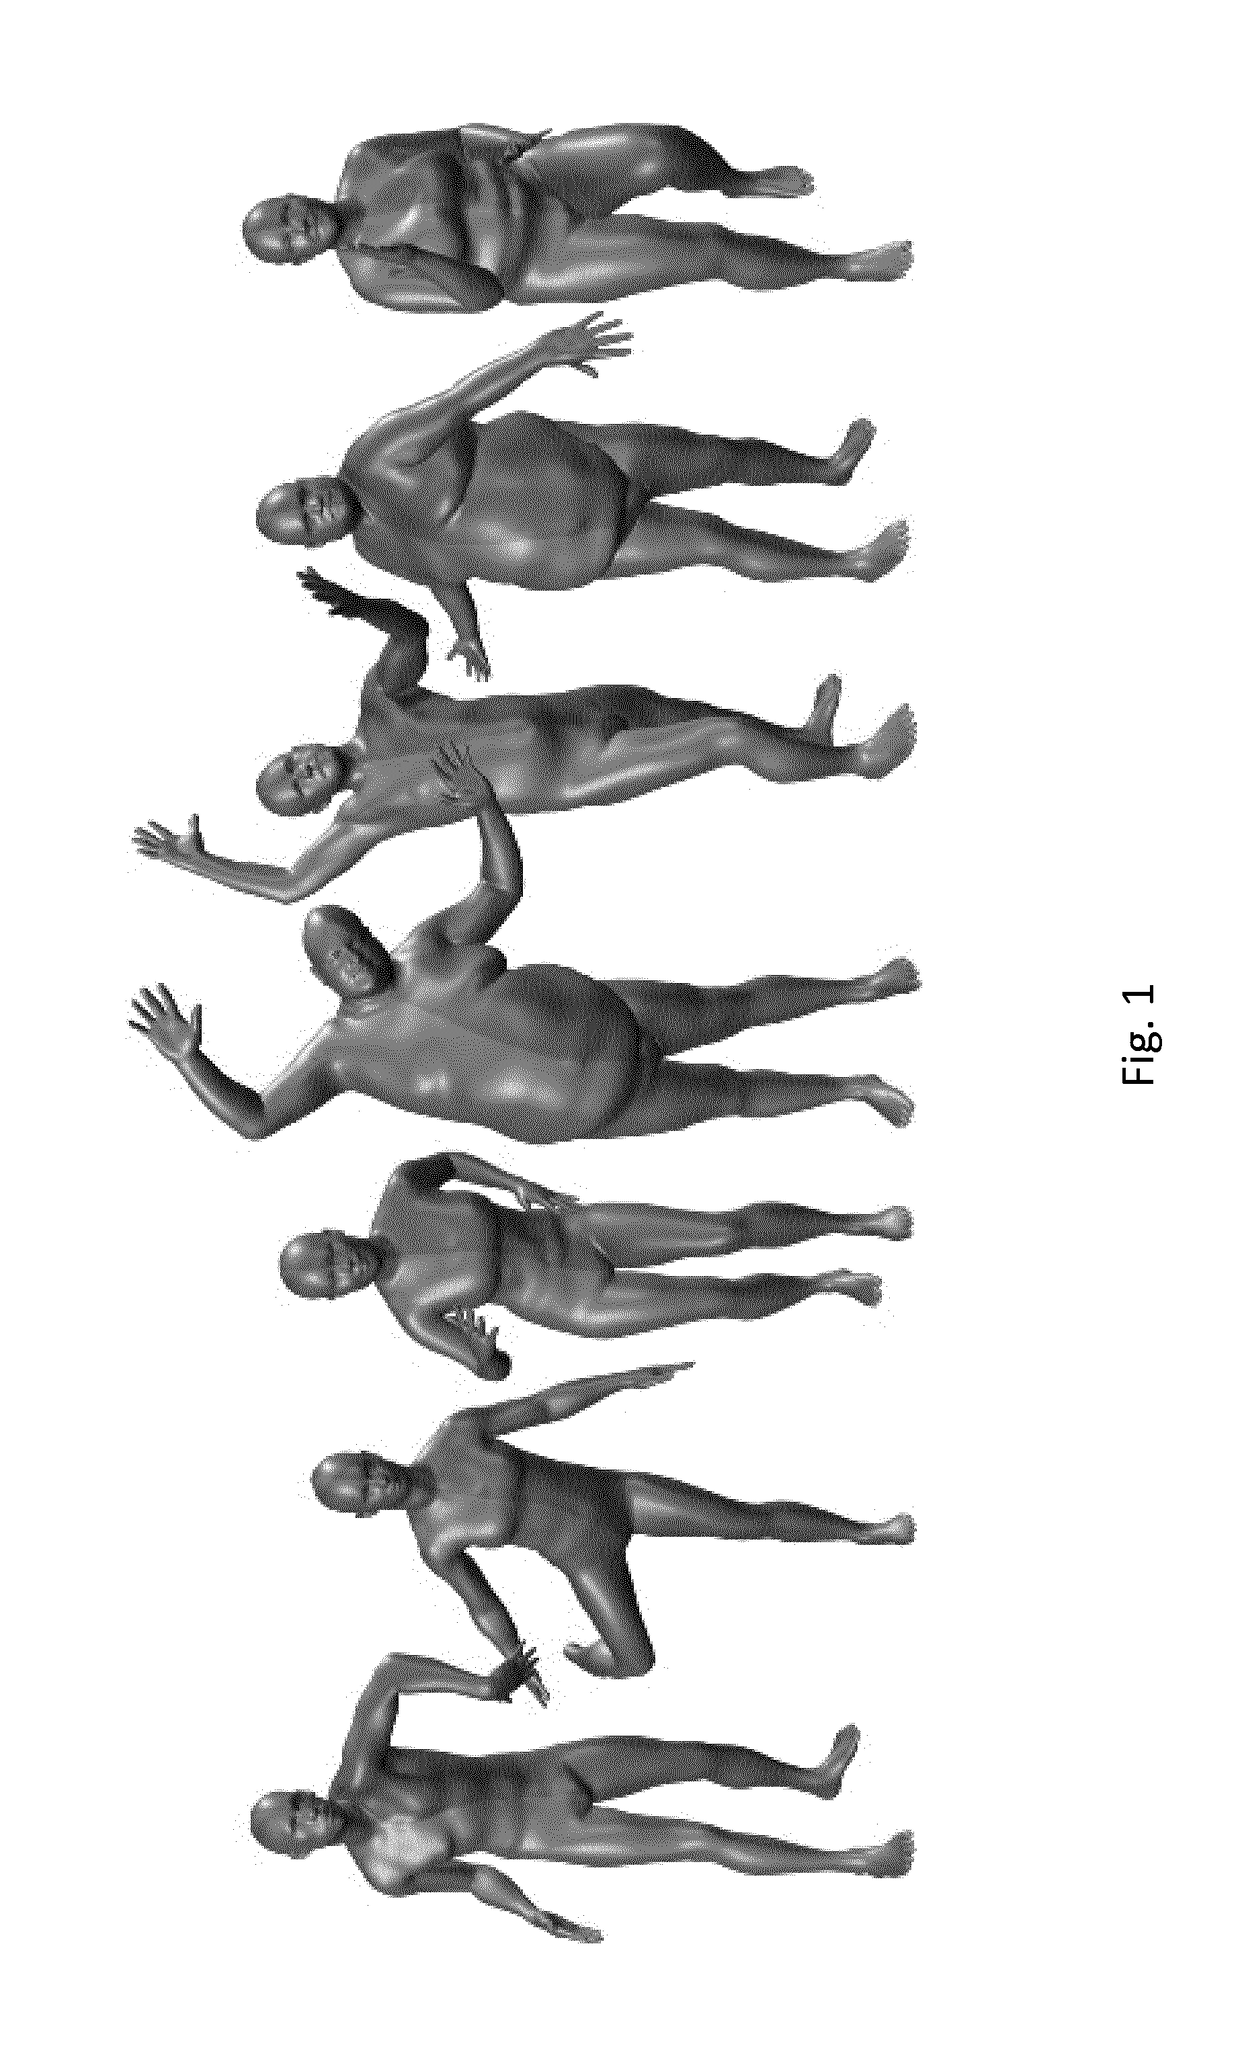 Skinned multi-person linear model